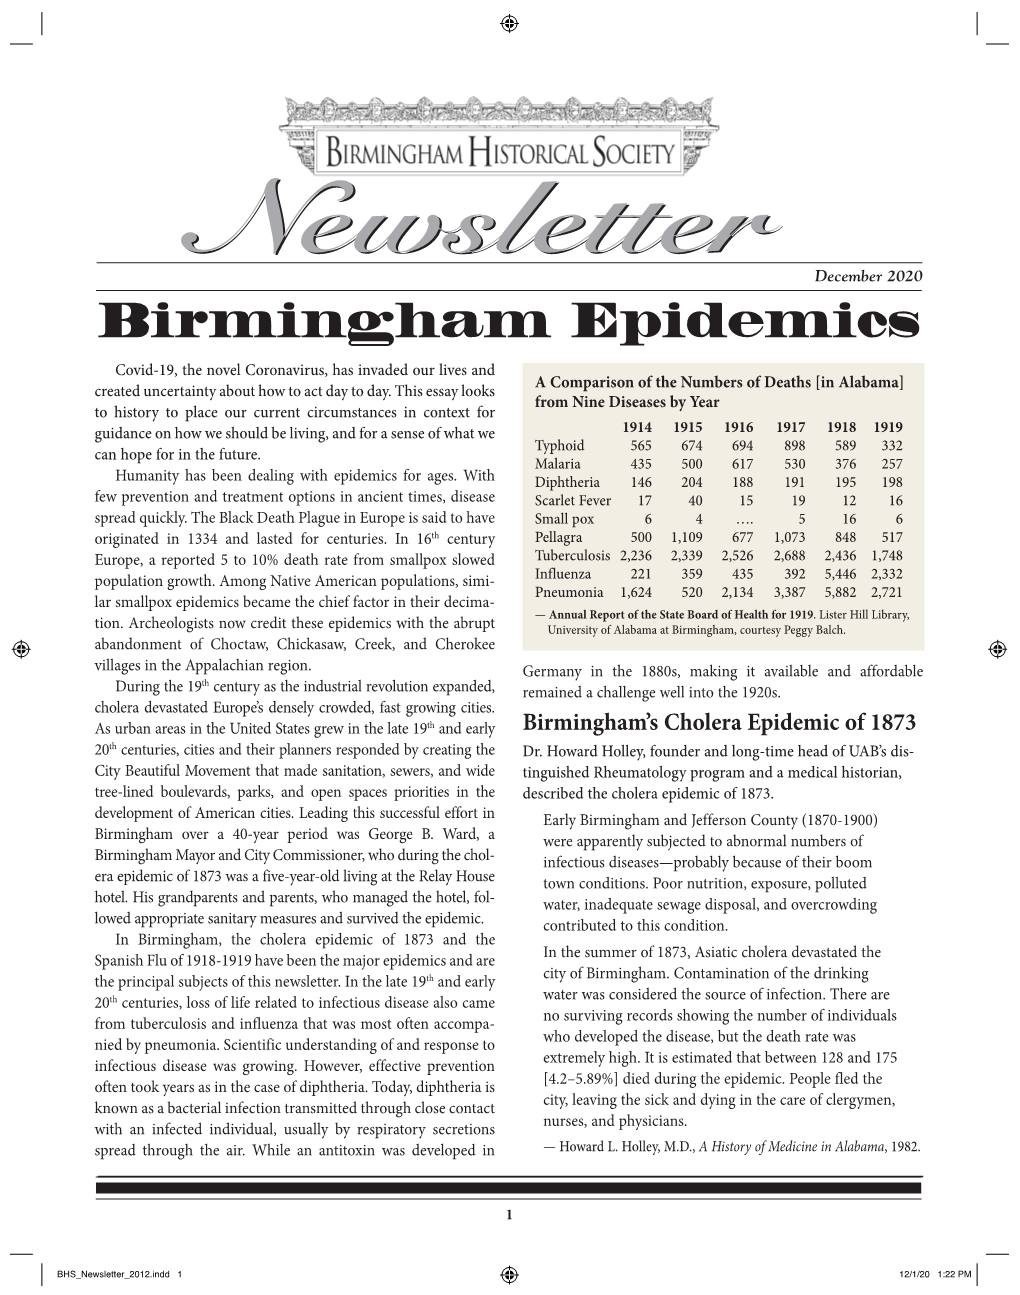 Birmingham Epidemics